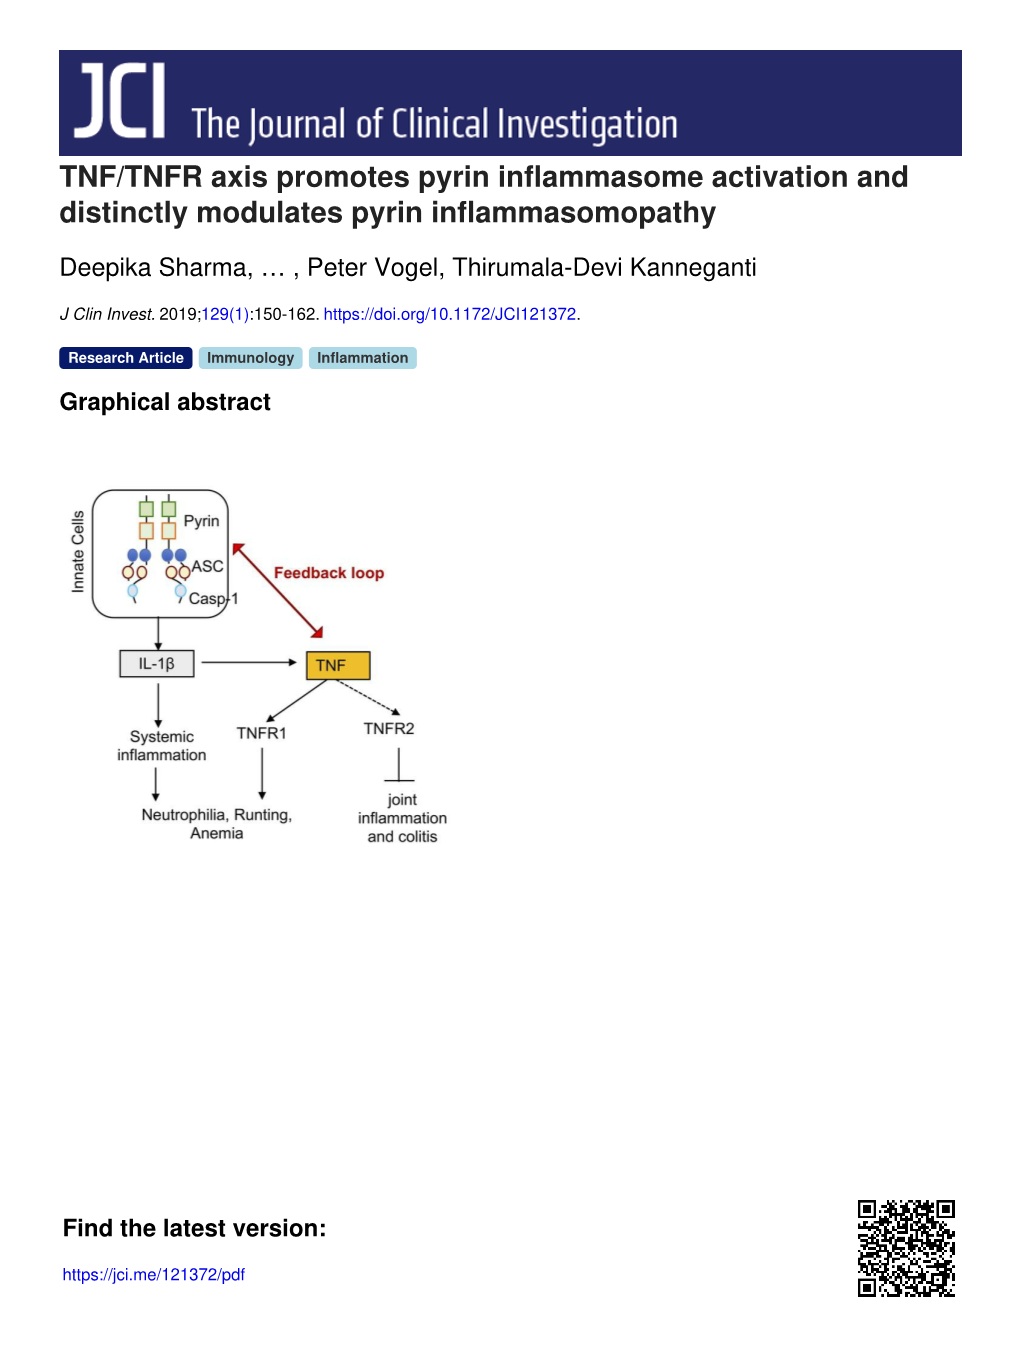 TNF/TNFR Axis Promotes Pyrin Inflammasome Activation and Distinctly Modulates Pyrin Inflammasomopathy